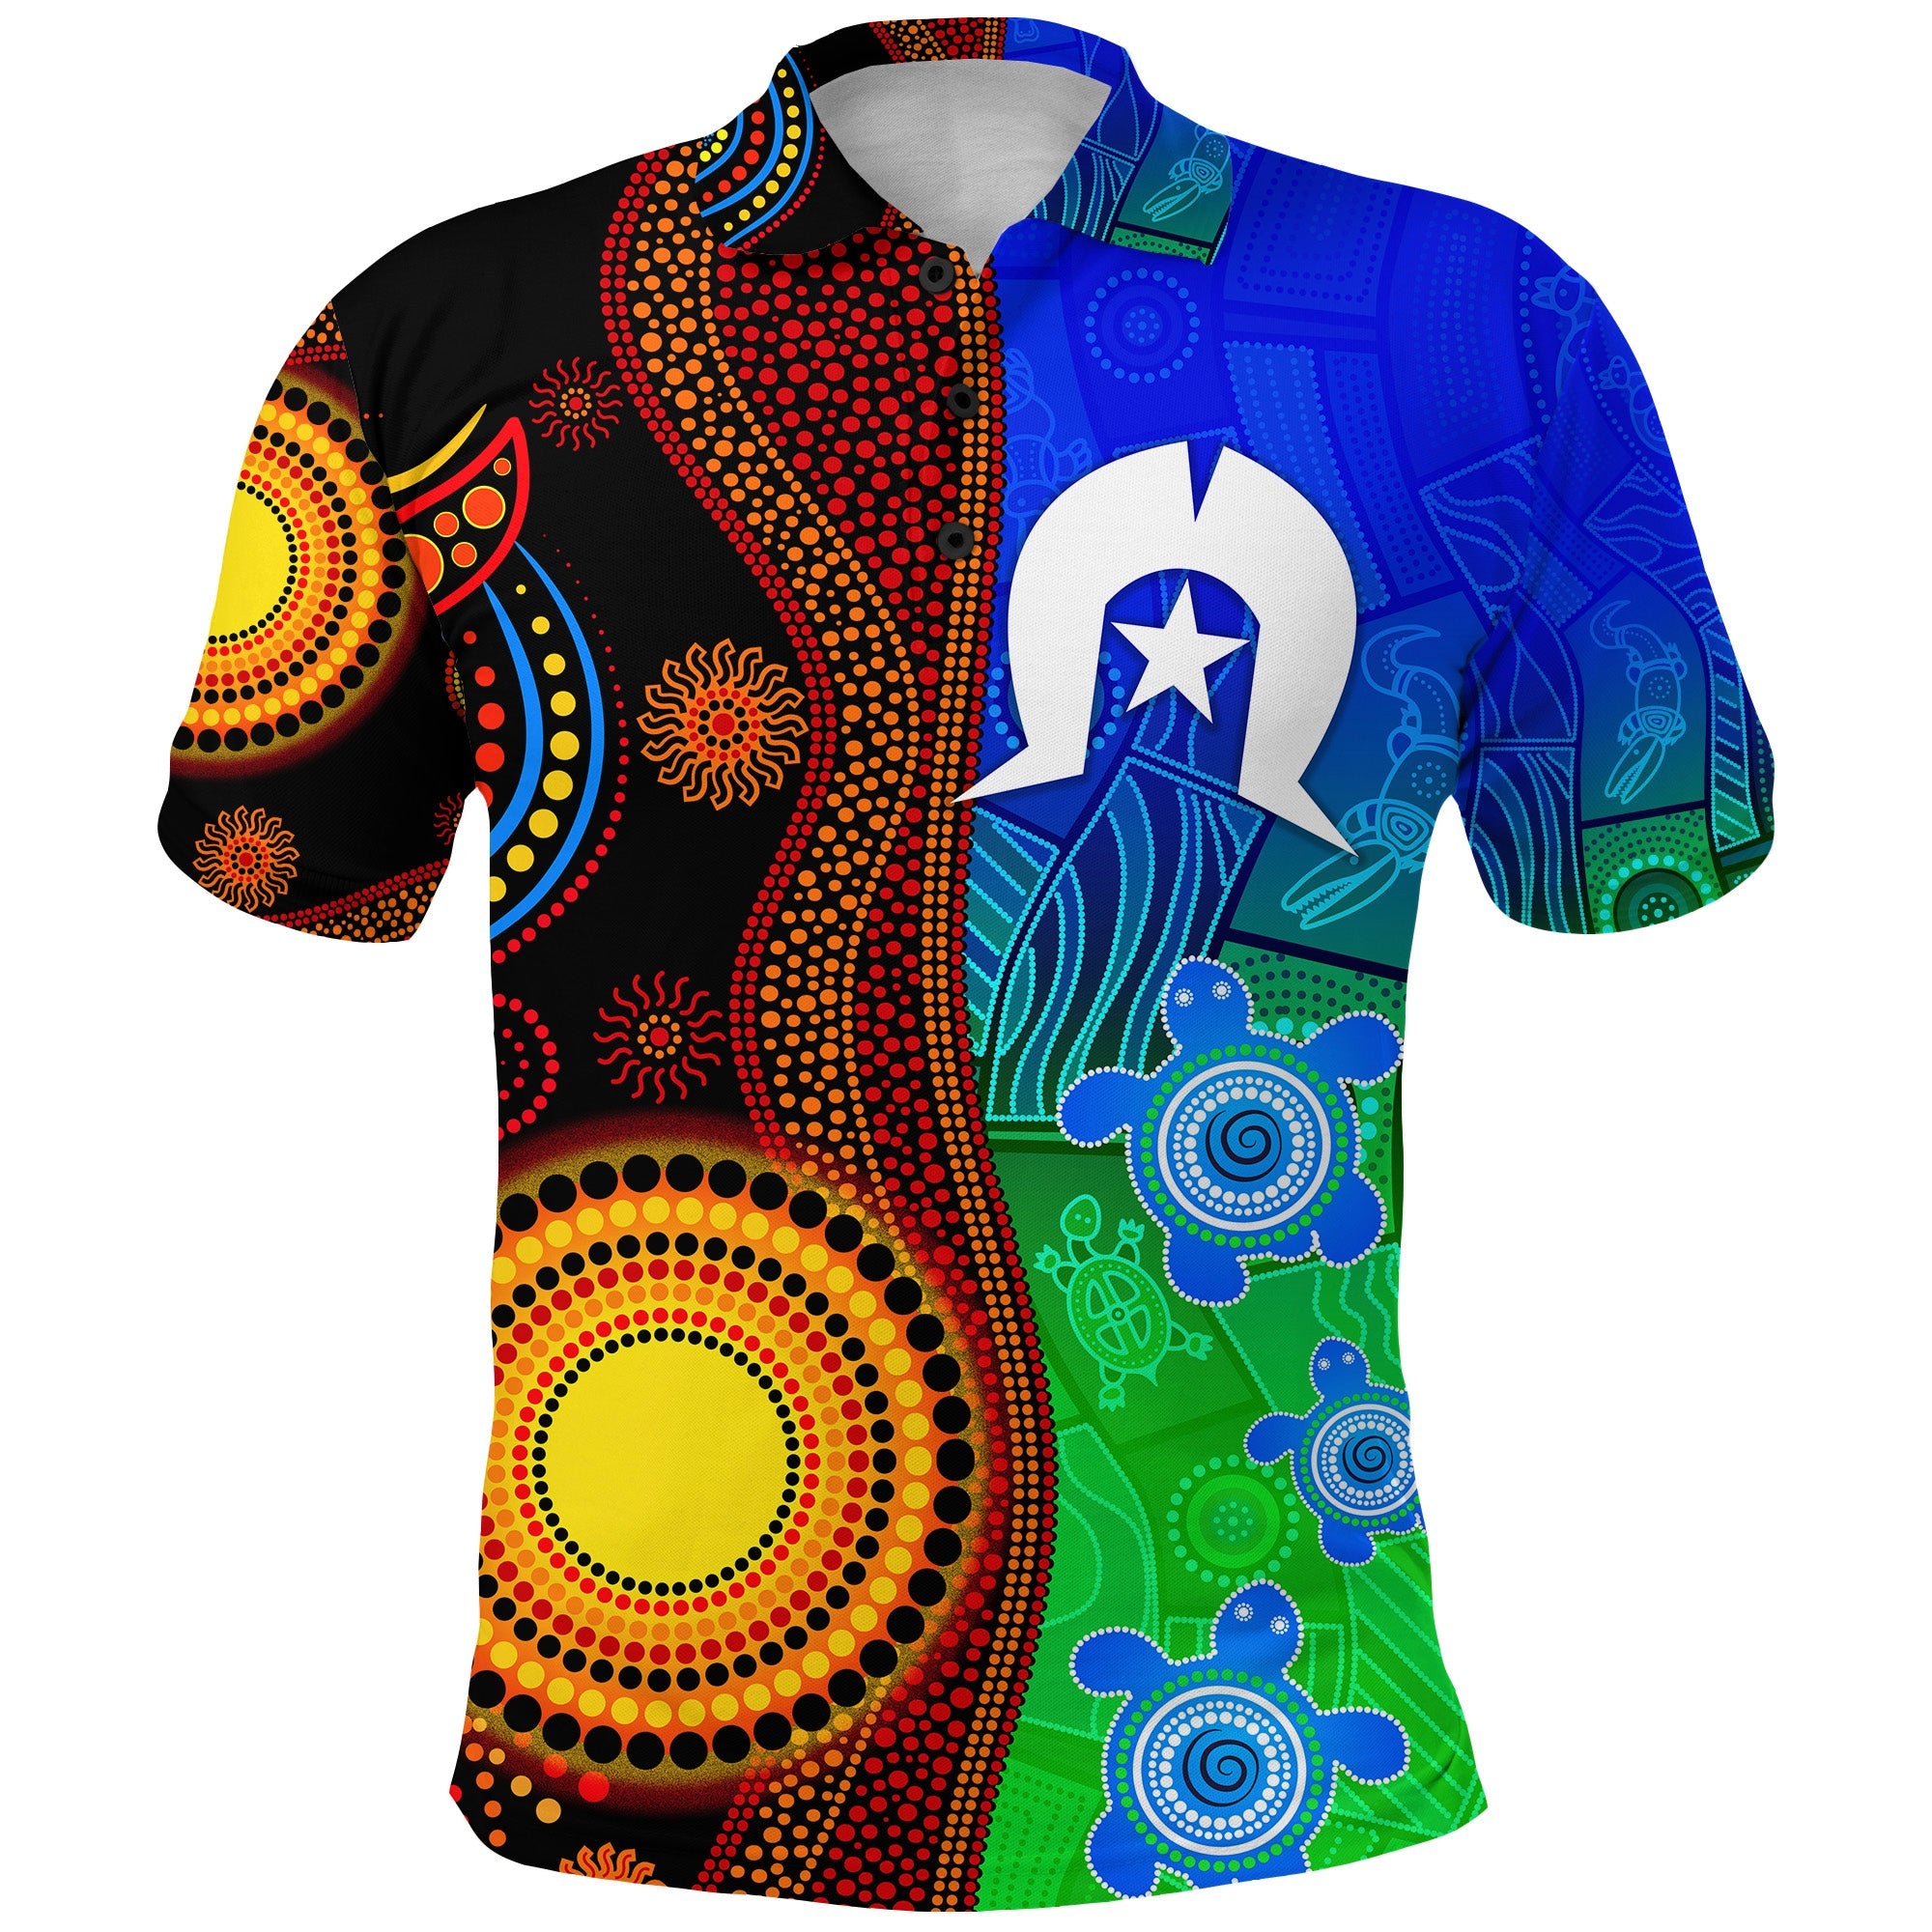 australia-indigenous-aboriginal-and-torres-strait-islands-polo-shirt-flag-vibes